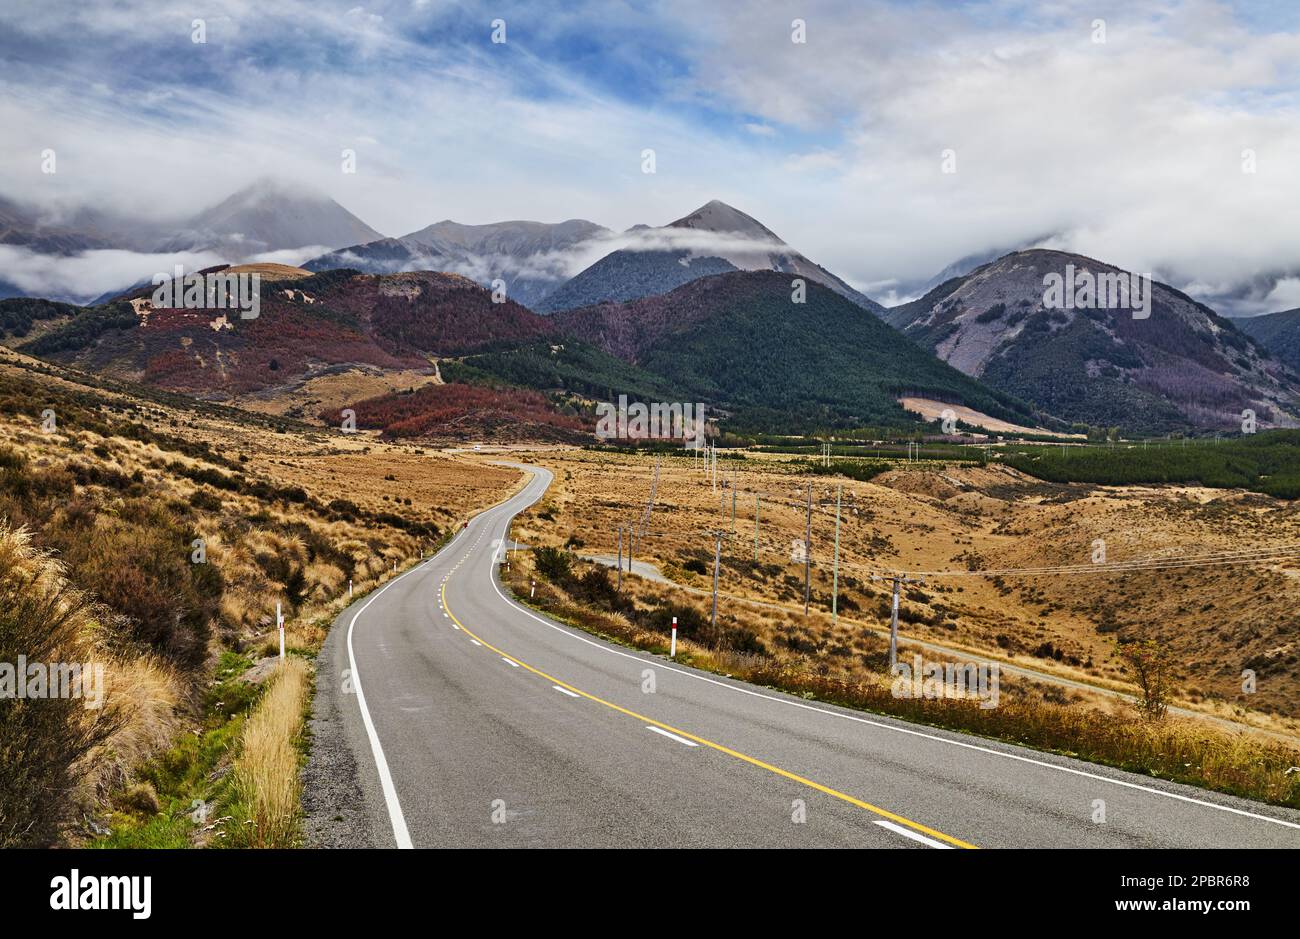 Paesaggio montano con strada e cielo nuvoloso, Arthur's Pass, Alpi meridionali, Nuova Zelanda Foto Stock